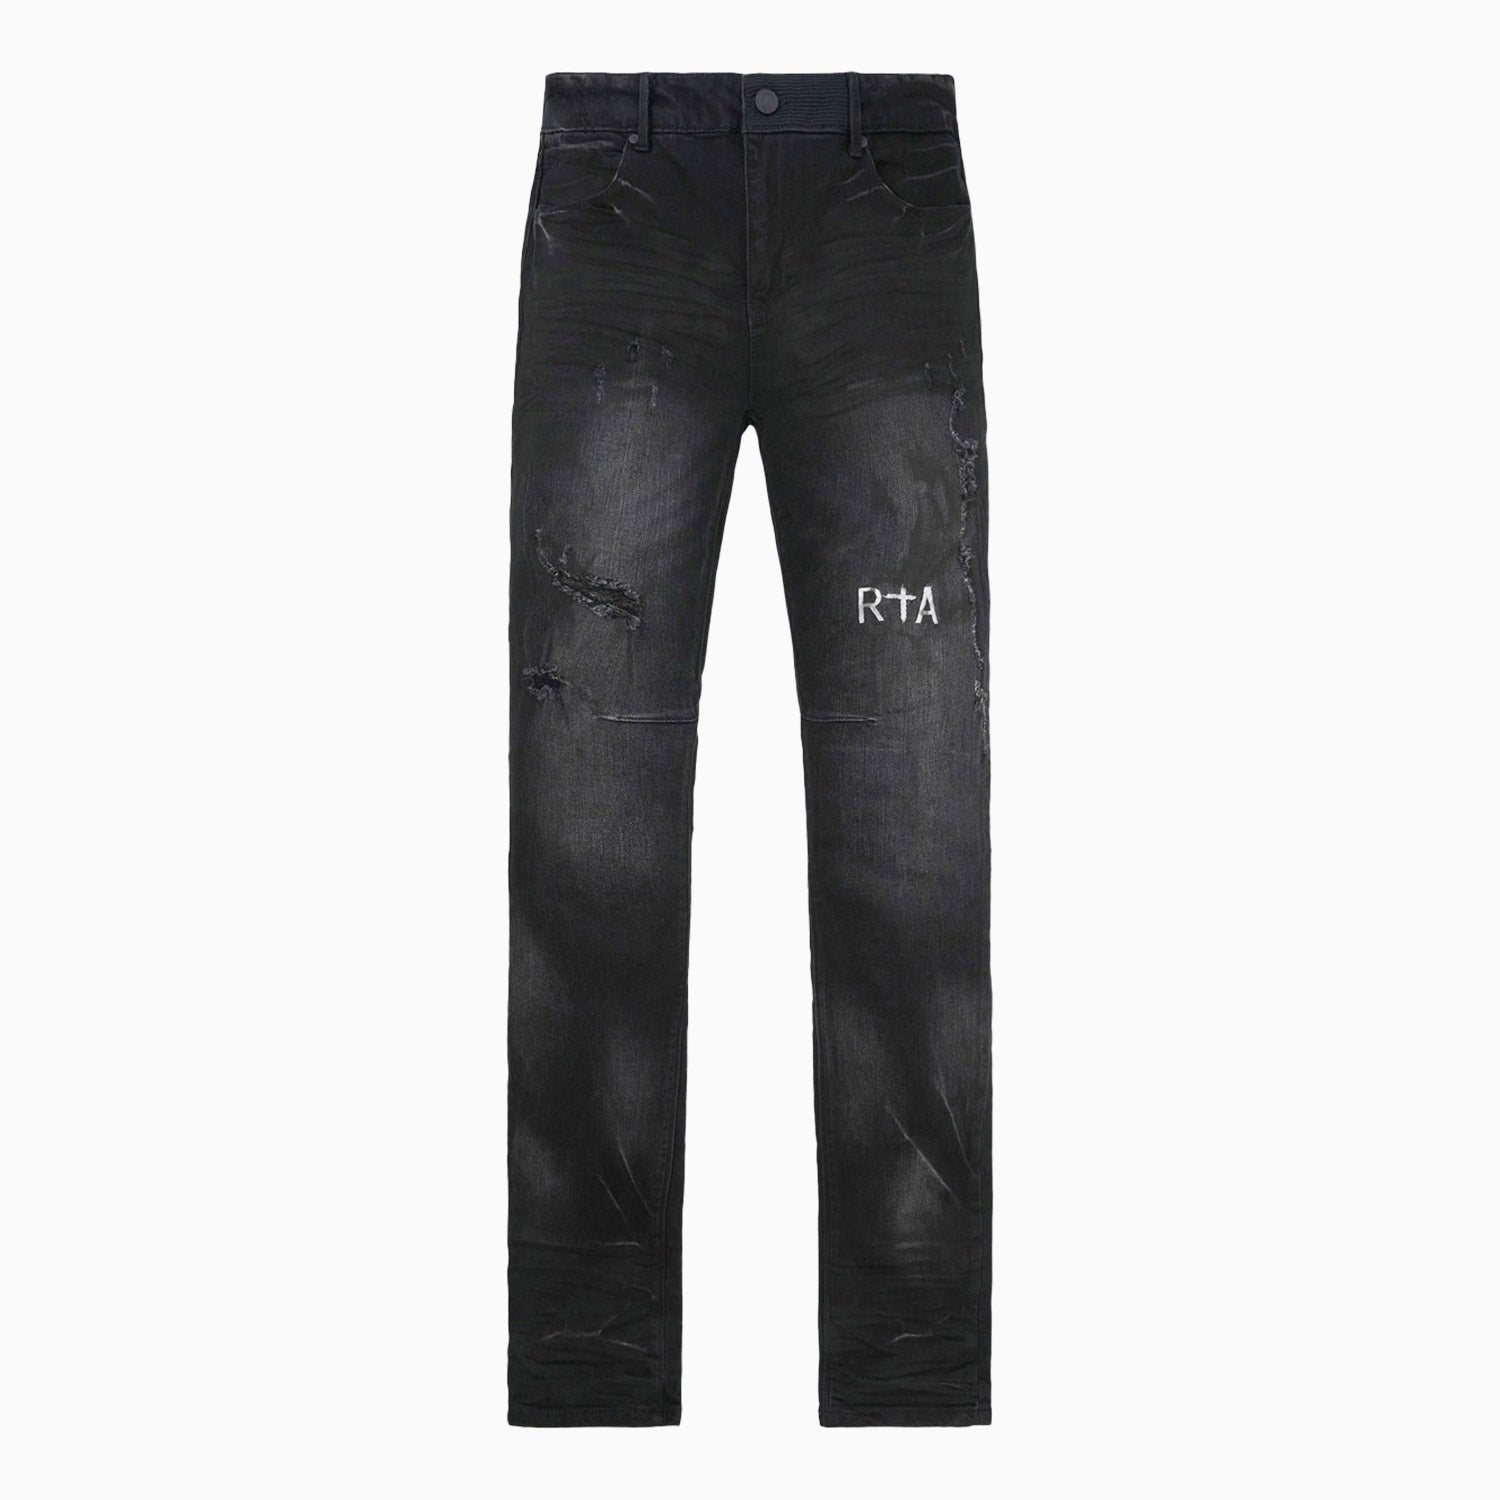 rta-mens-olivier-denim-jeans-pant-mf23d683-b1838woubl